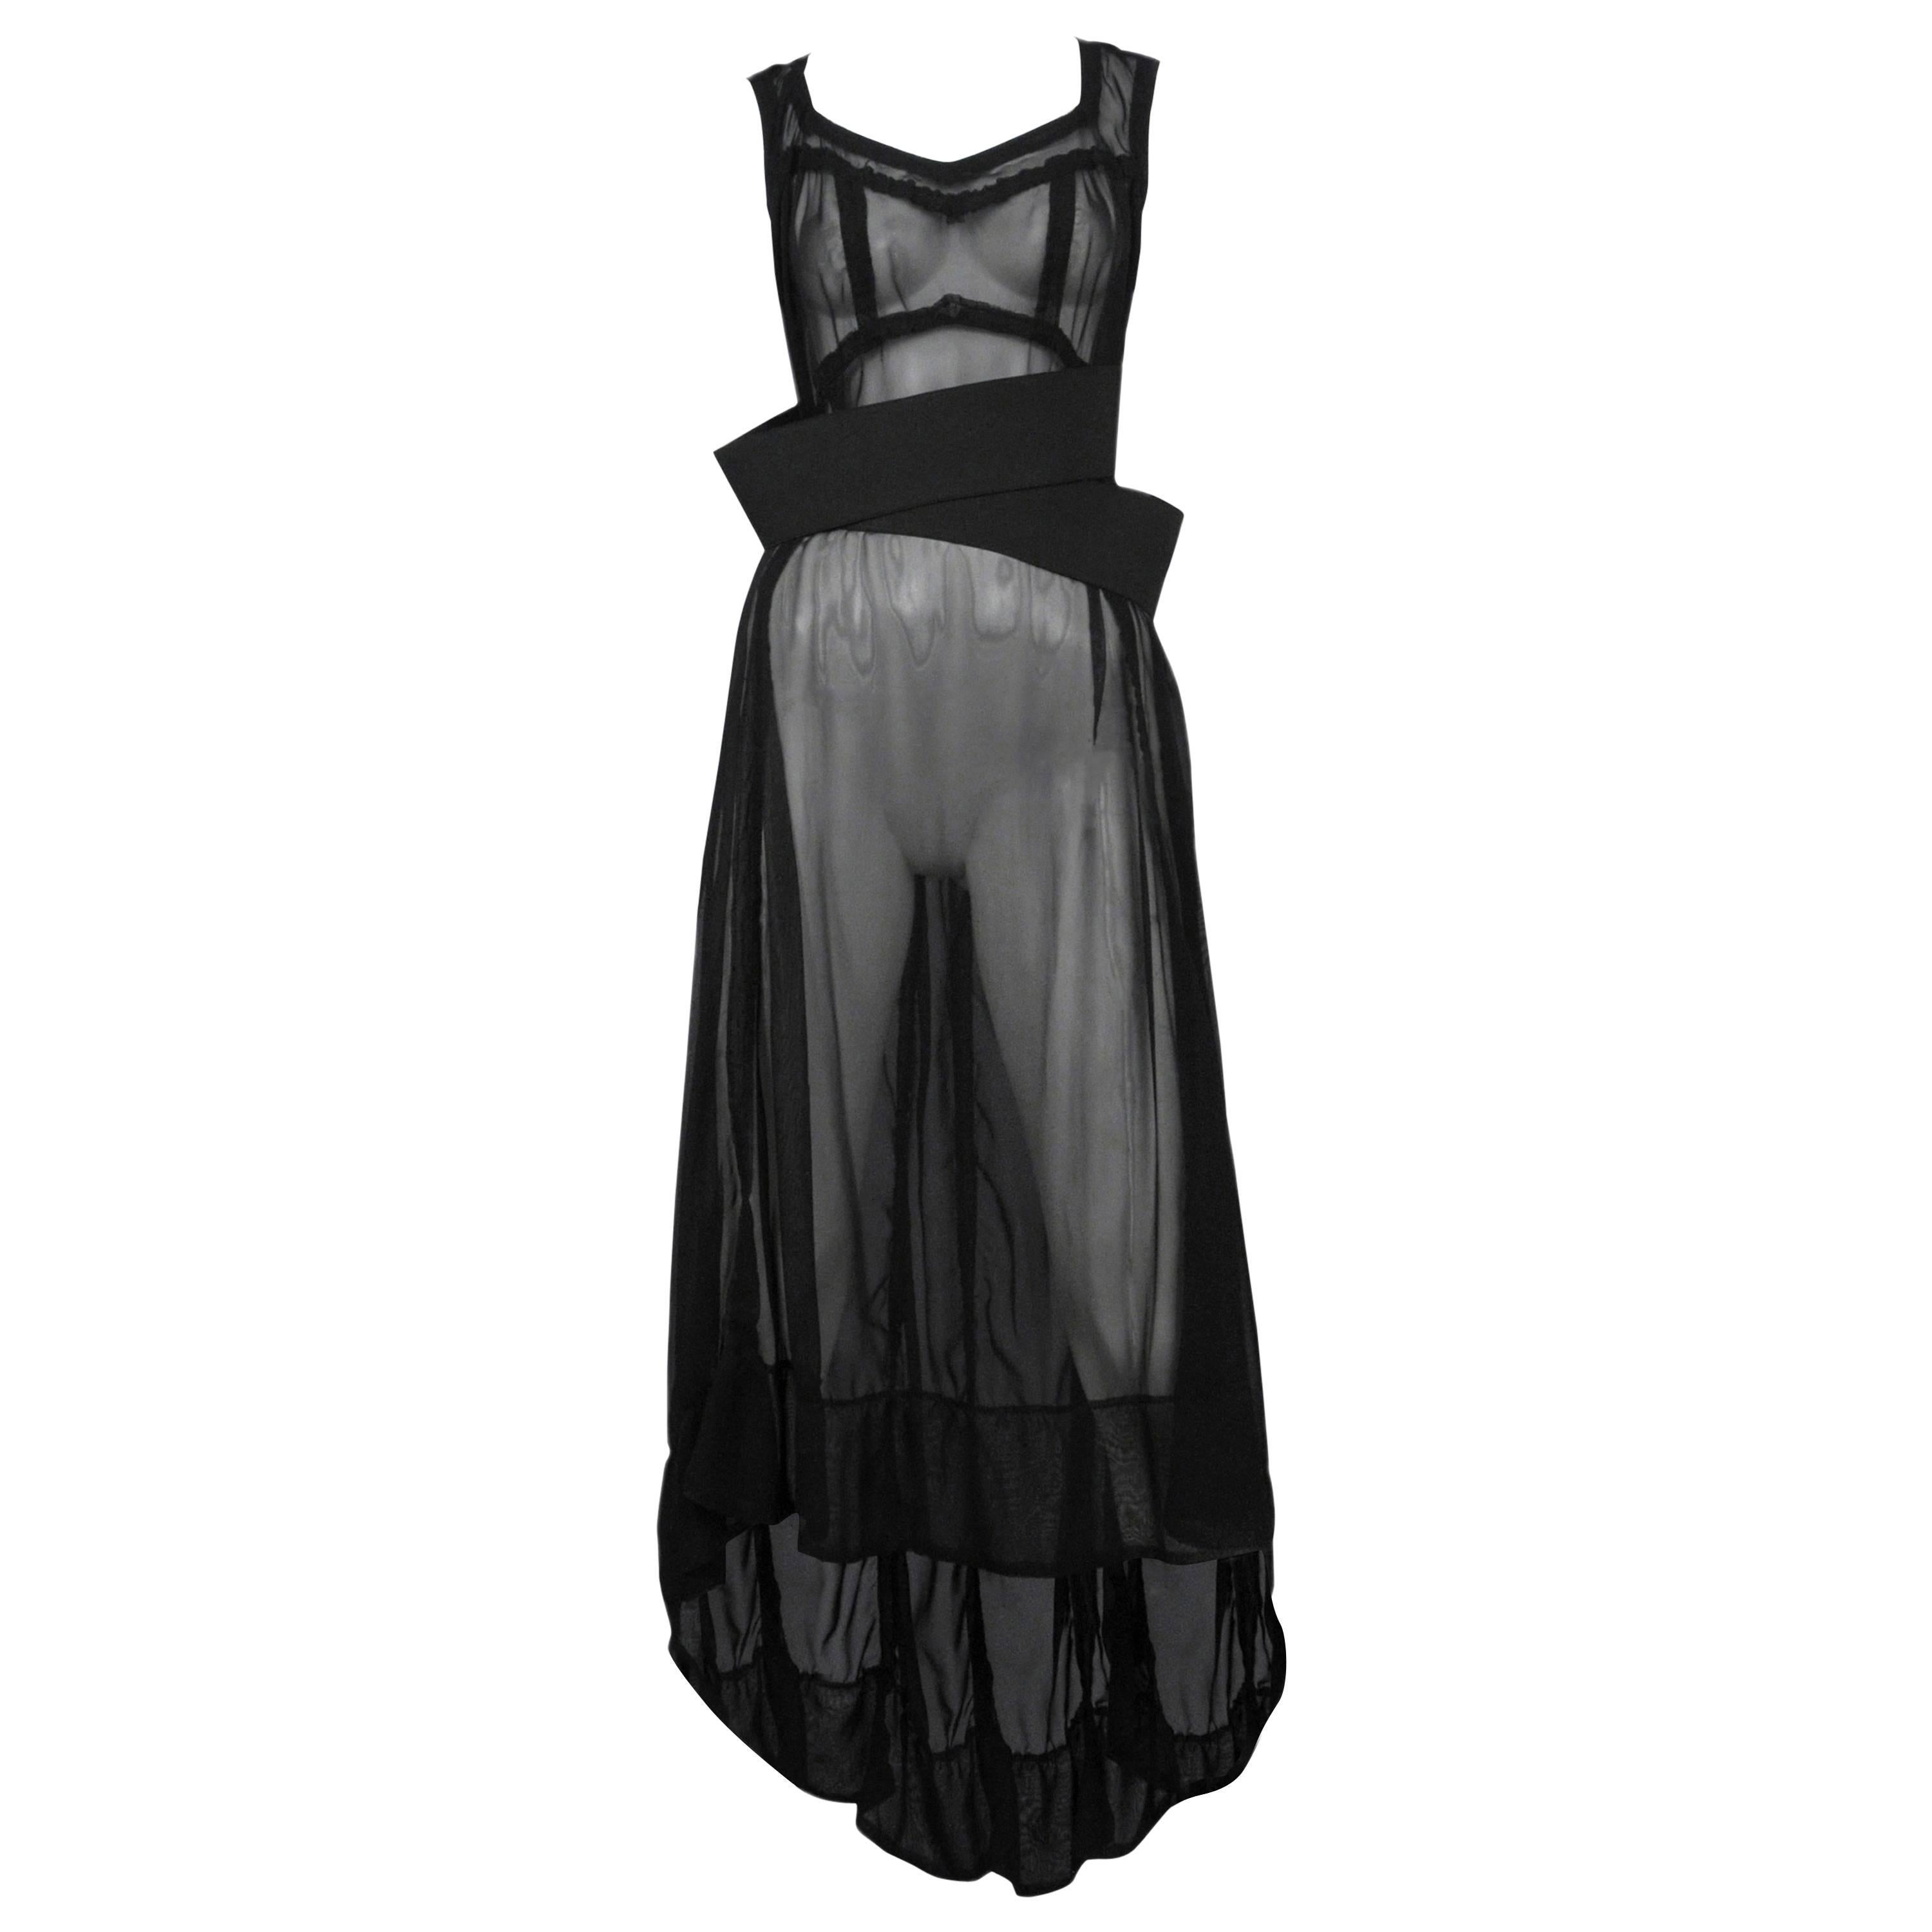 CDG Black Sheer Elastic Dress 2010